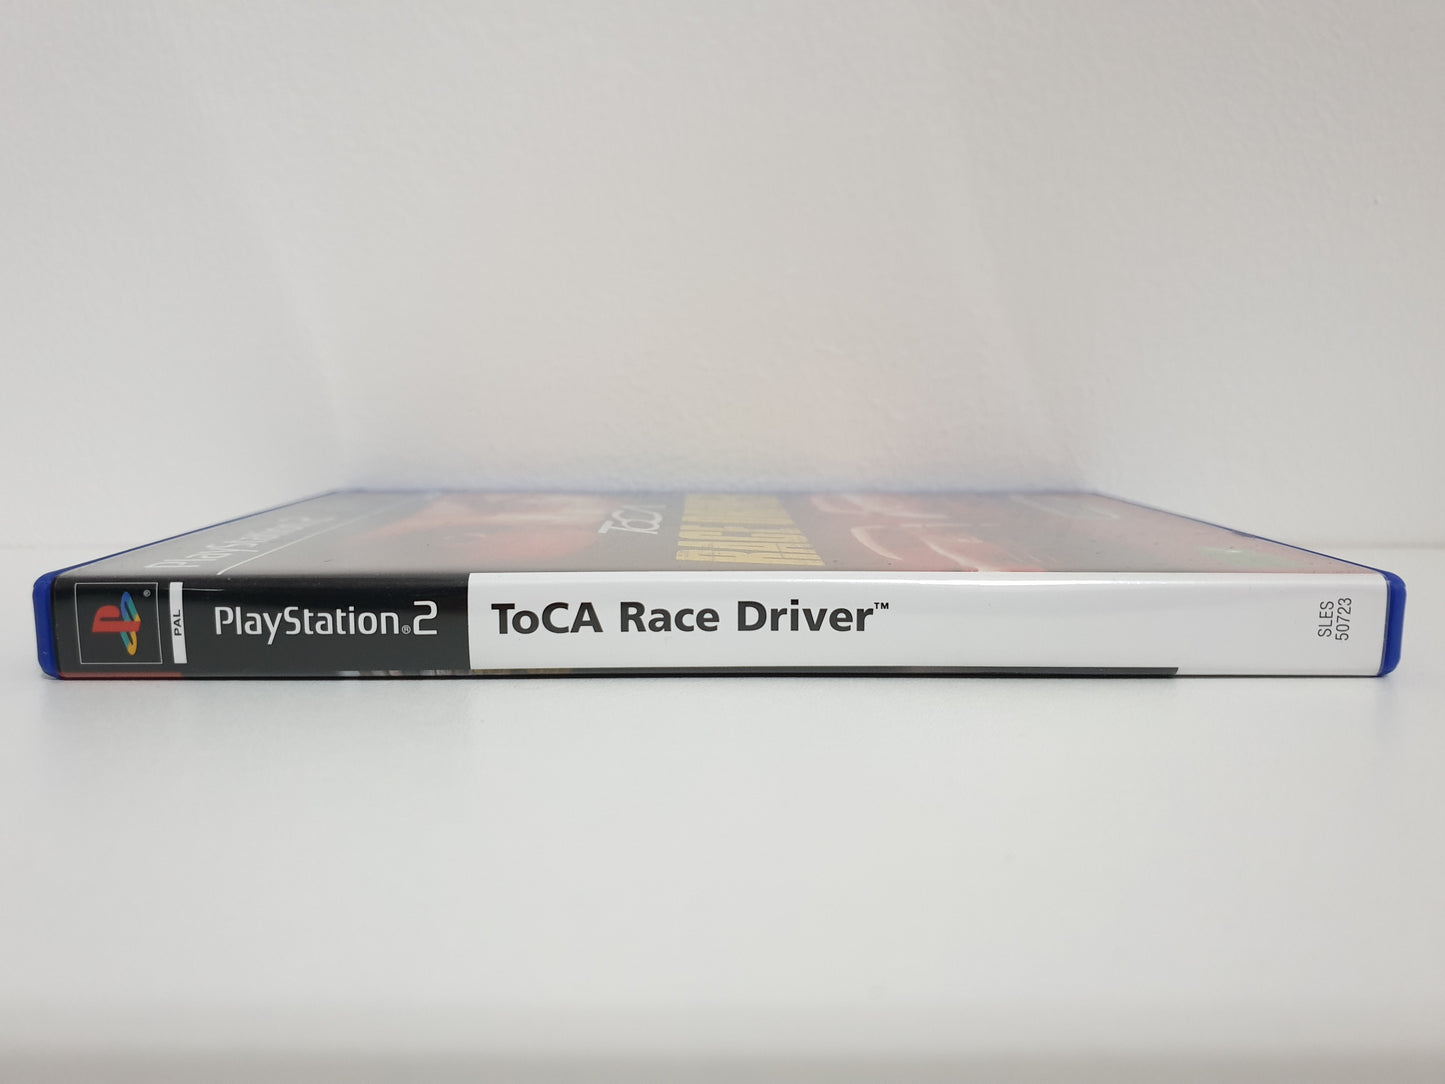 TOCA Race Driver PS2 - Occasion bon état